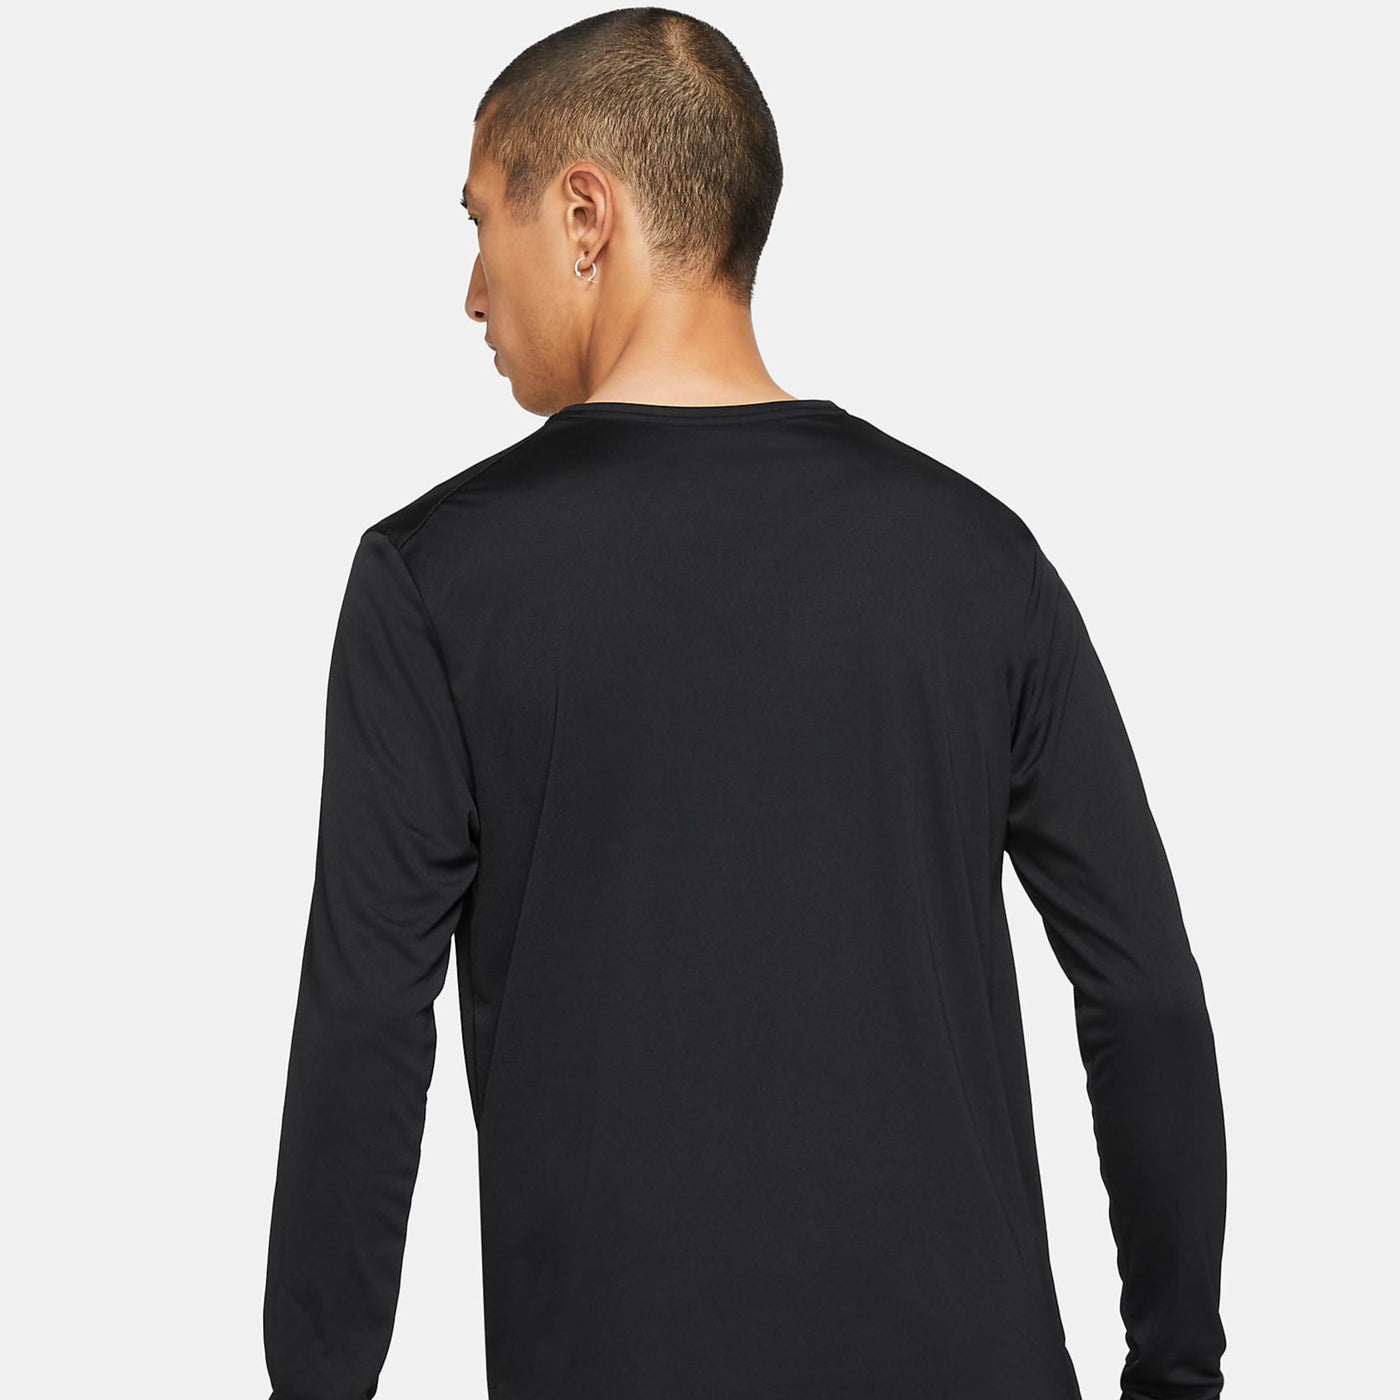 Nike Dri-FIT Men's Long-Sleeve Running T-shirt - Black